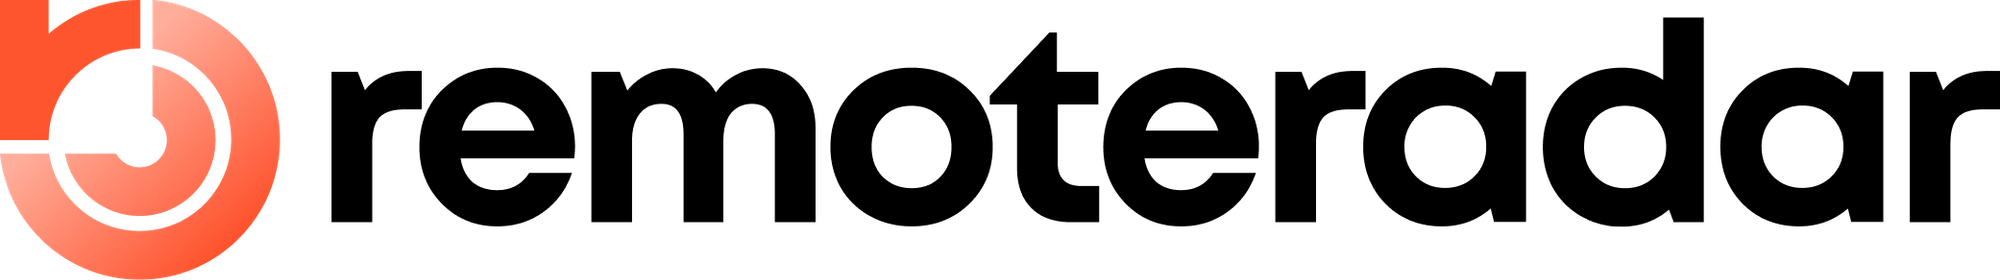 Modern logo design for remoteradar.io